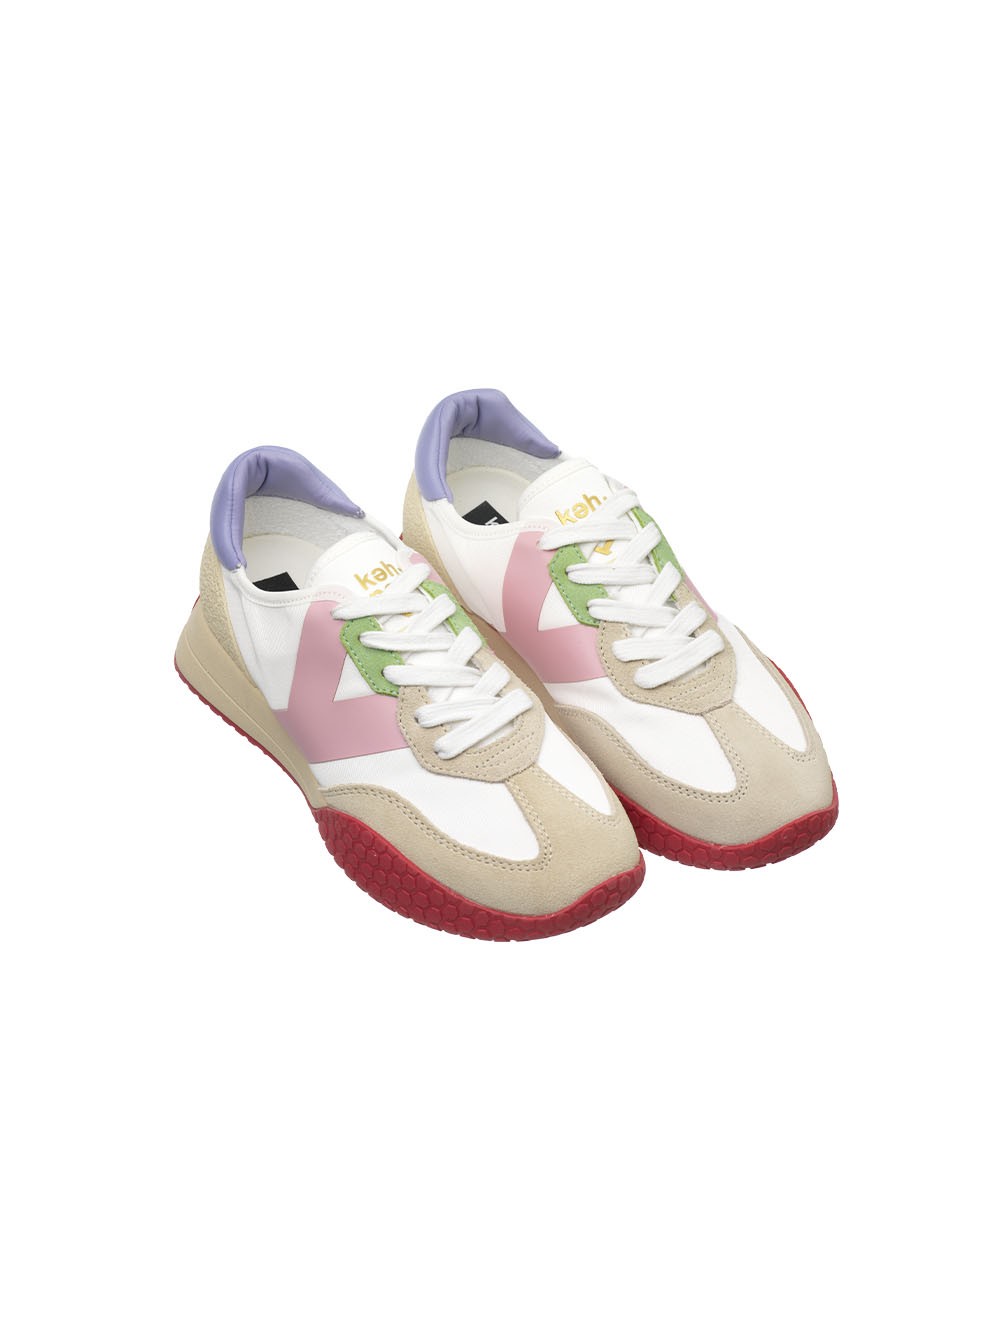 Ambassador in White/Pink/Lilla Sneakers Keh-Noo   